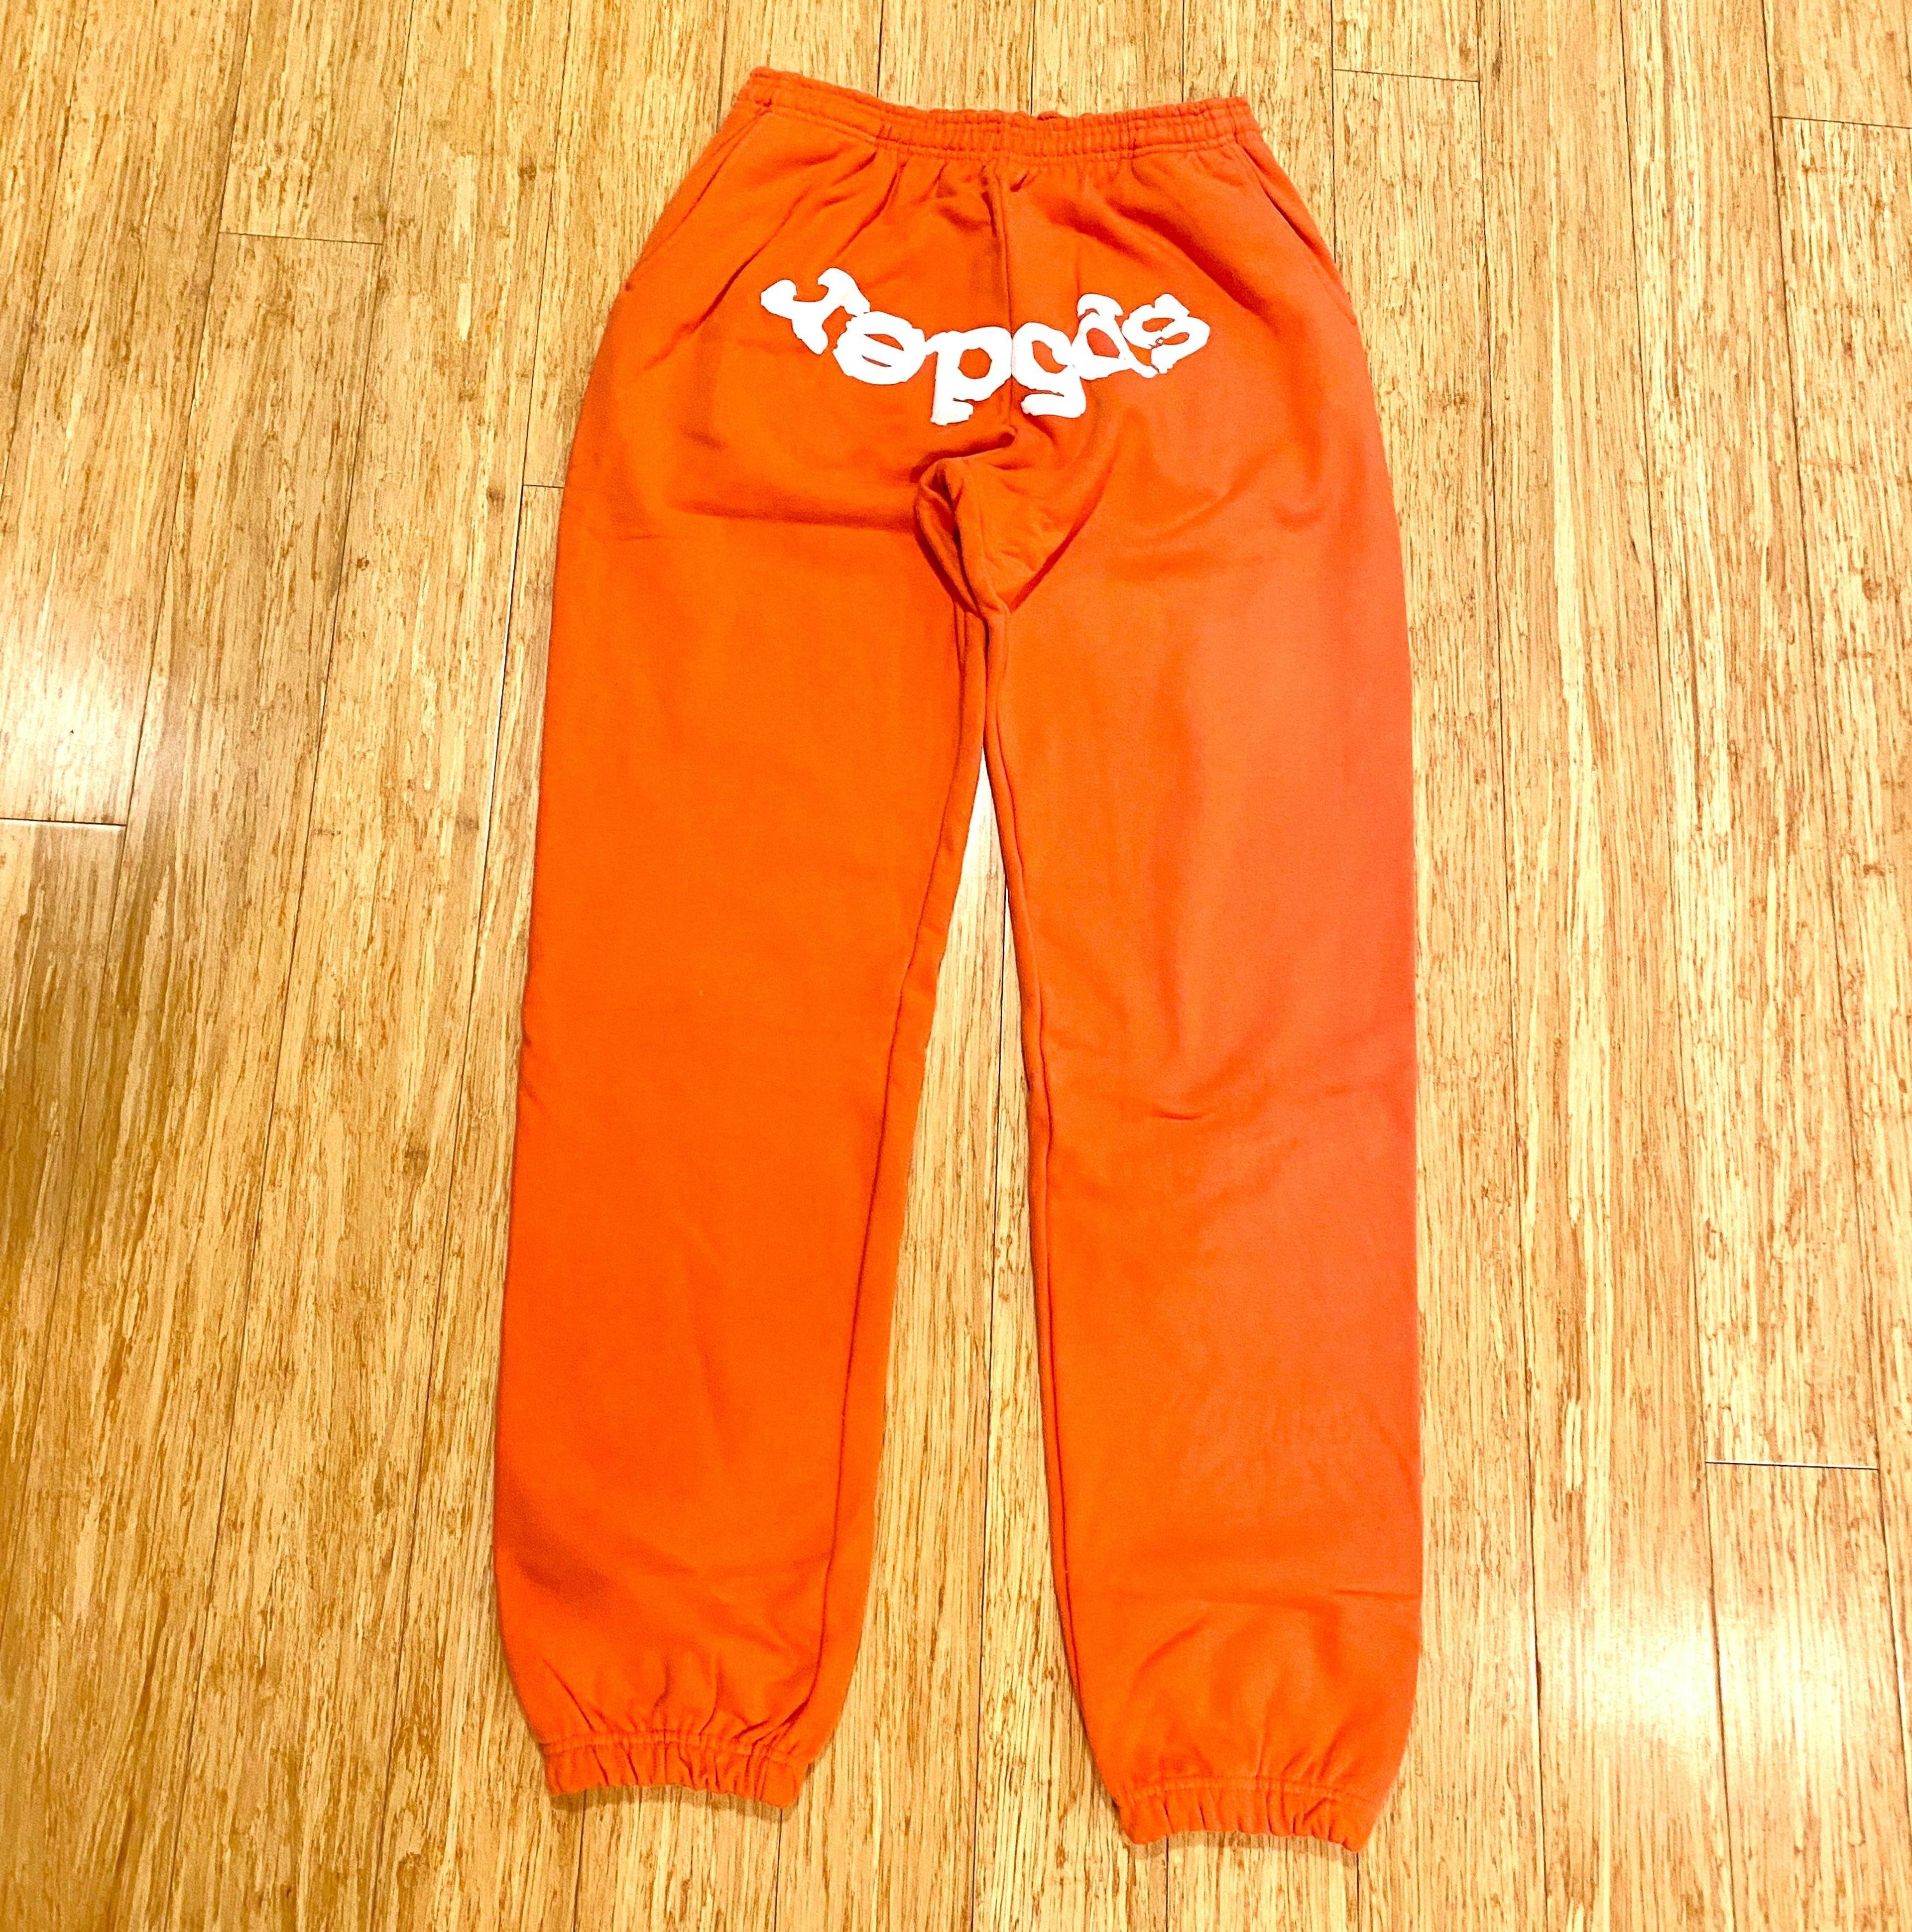 Sp5der Sweatpants Orange